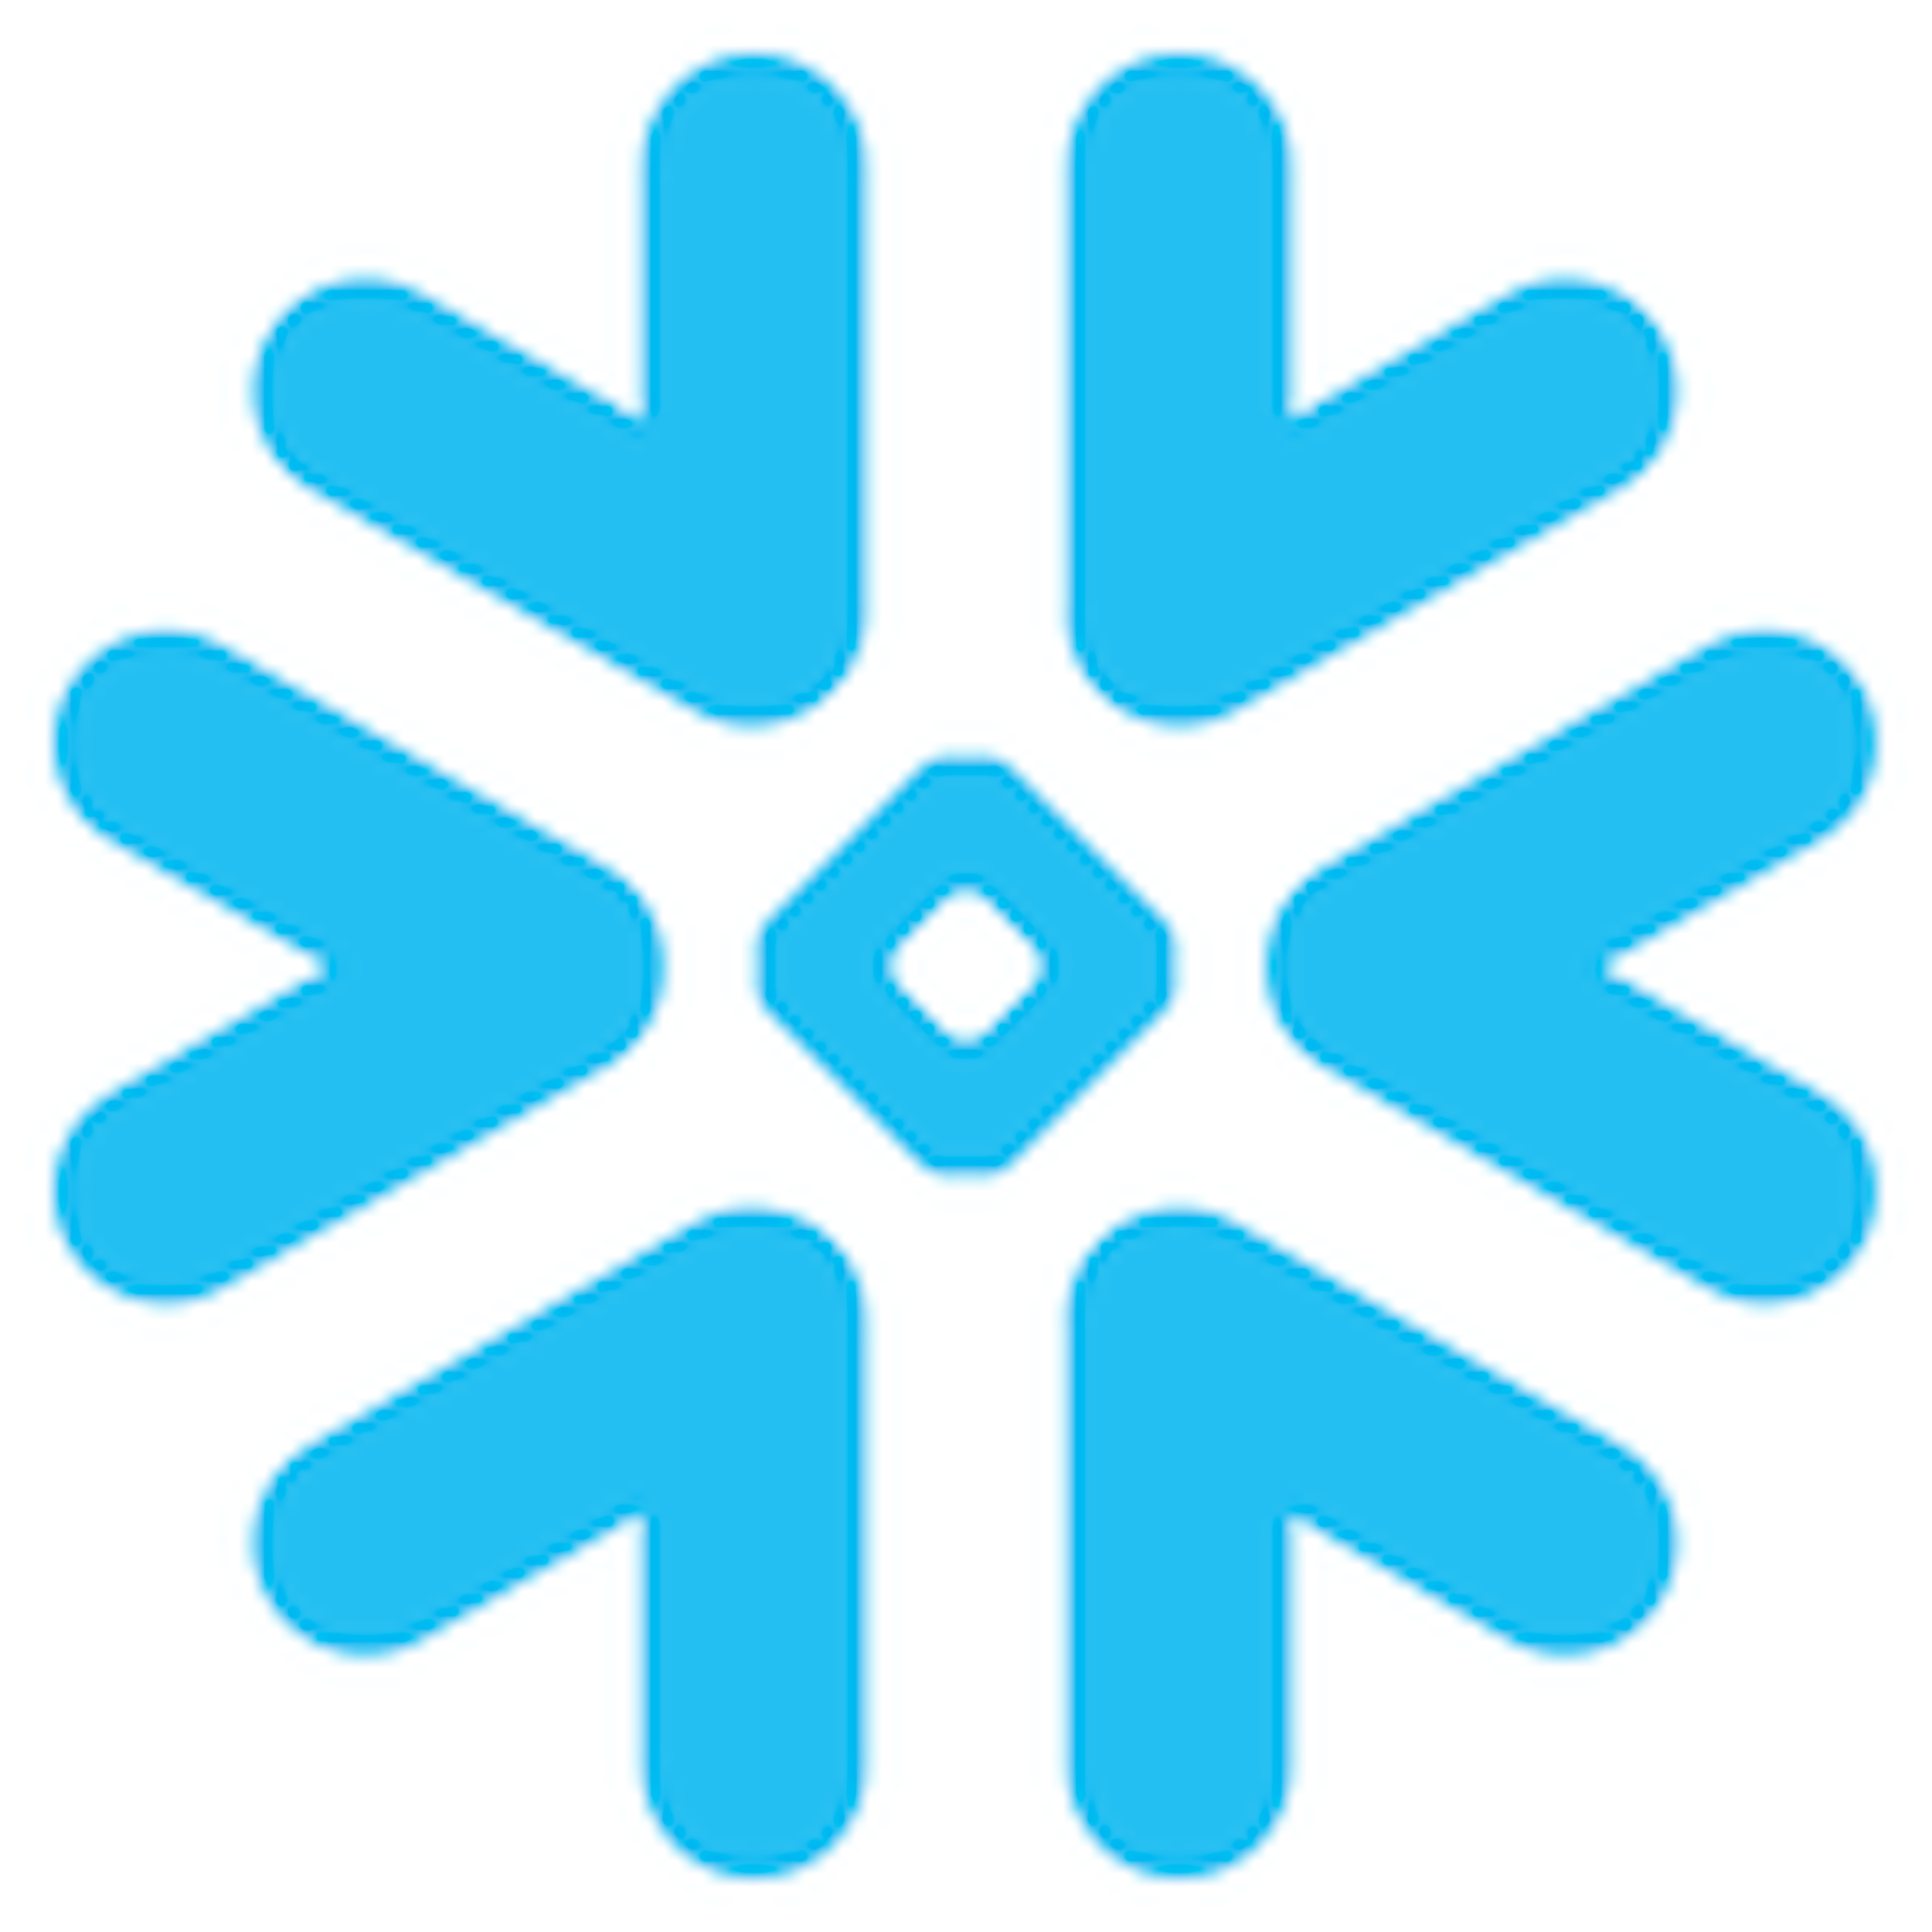 Snowflake Logo